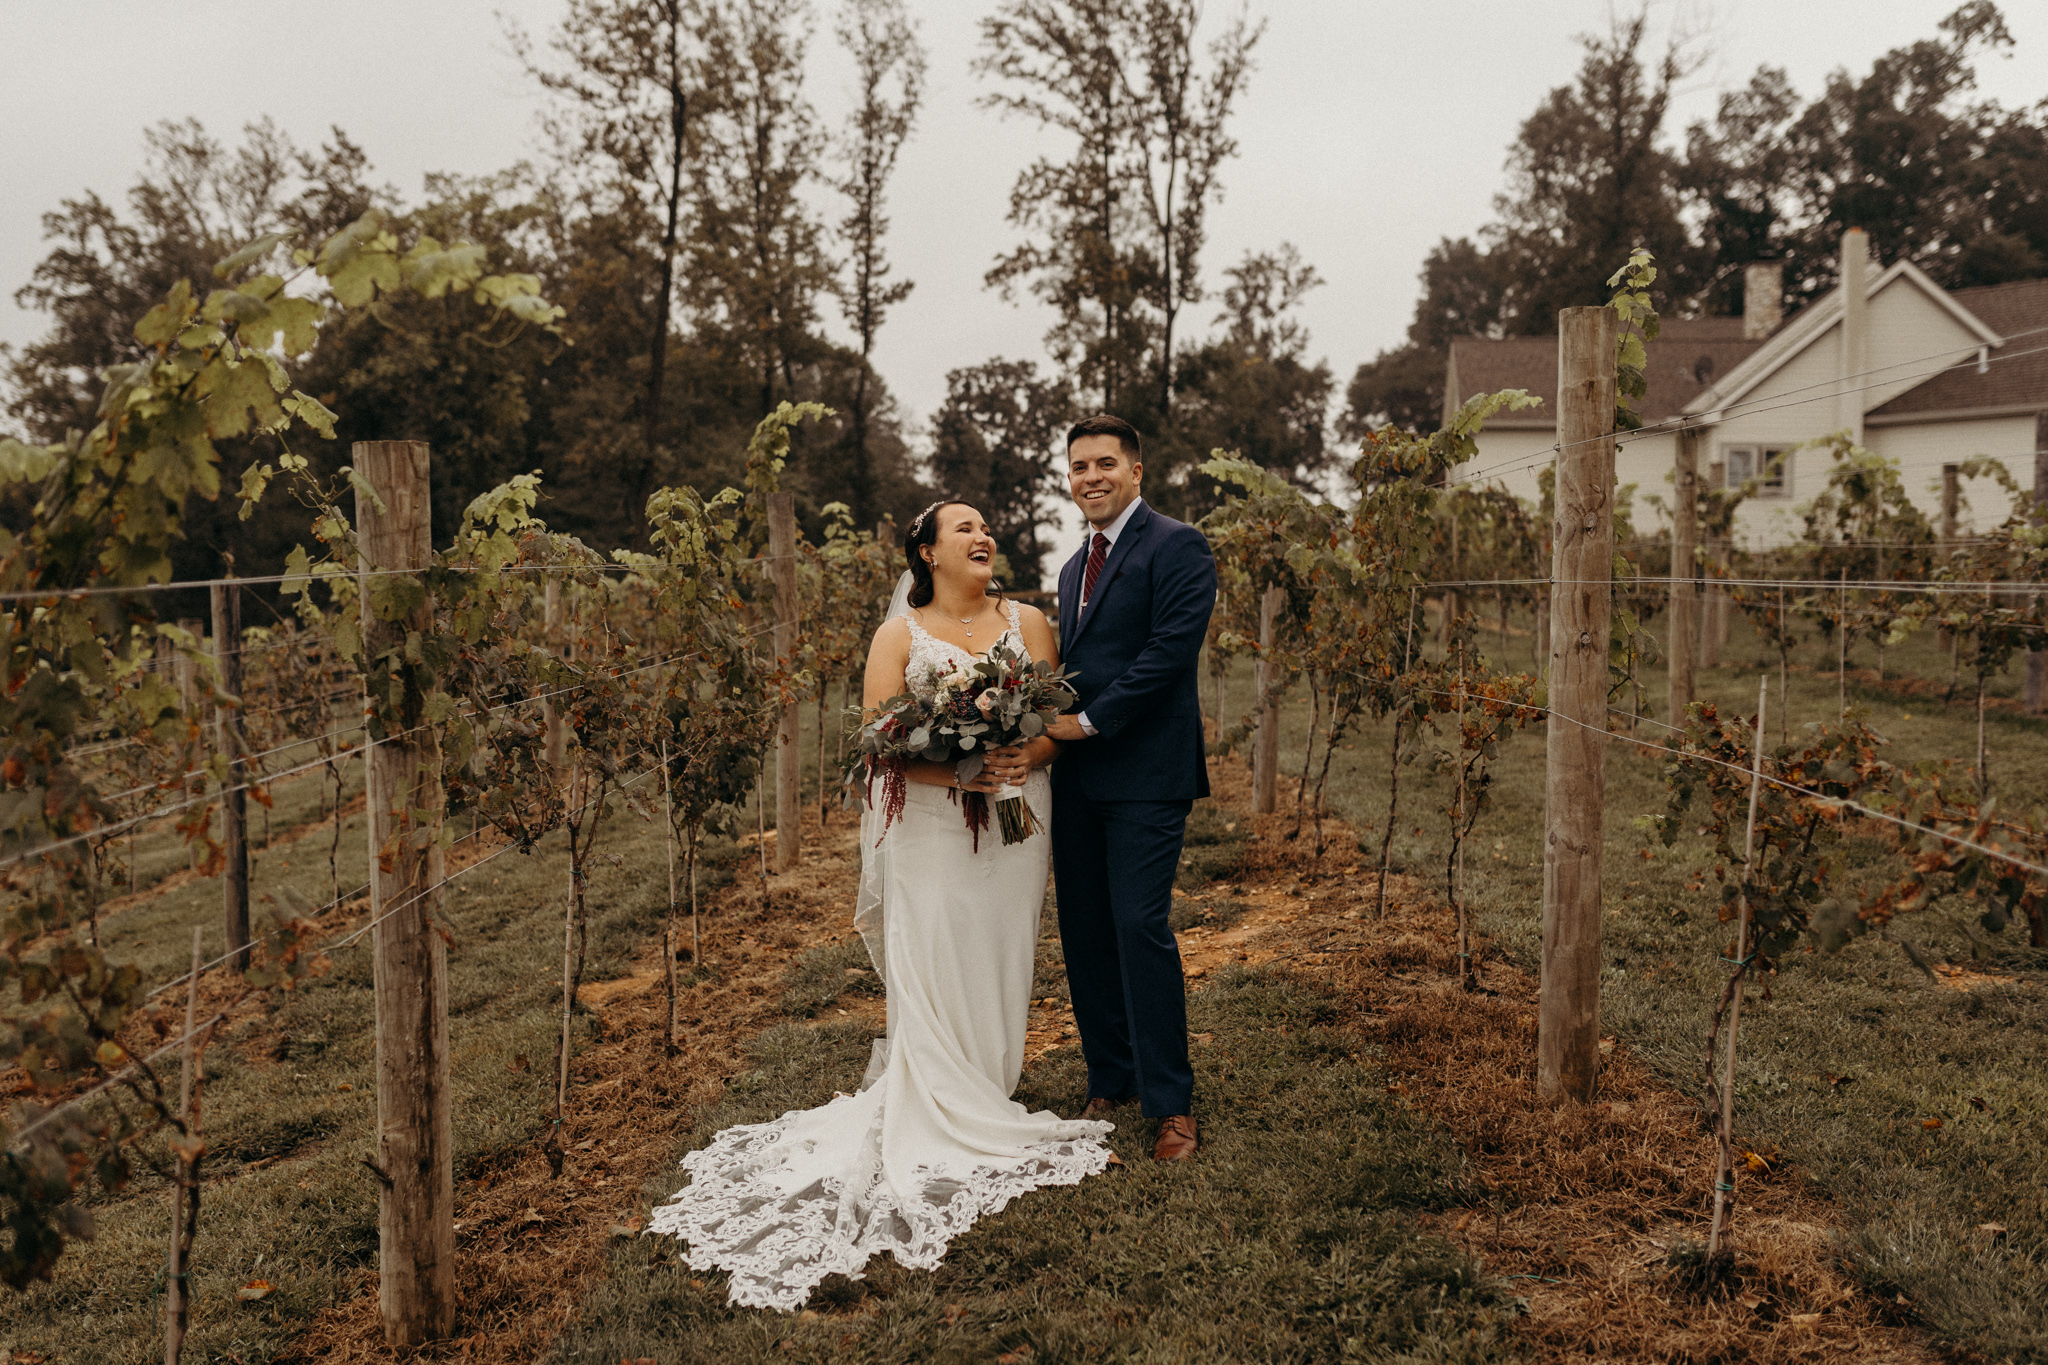 Romantic micro-wedding on rolling vineyard hills outside lancaster, pennsylvania, nature-inspired elopement photographer